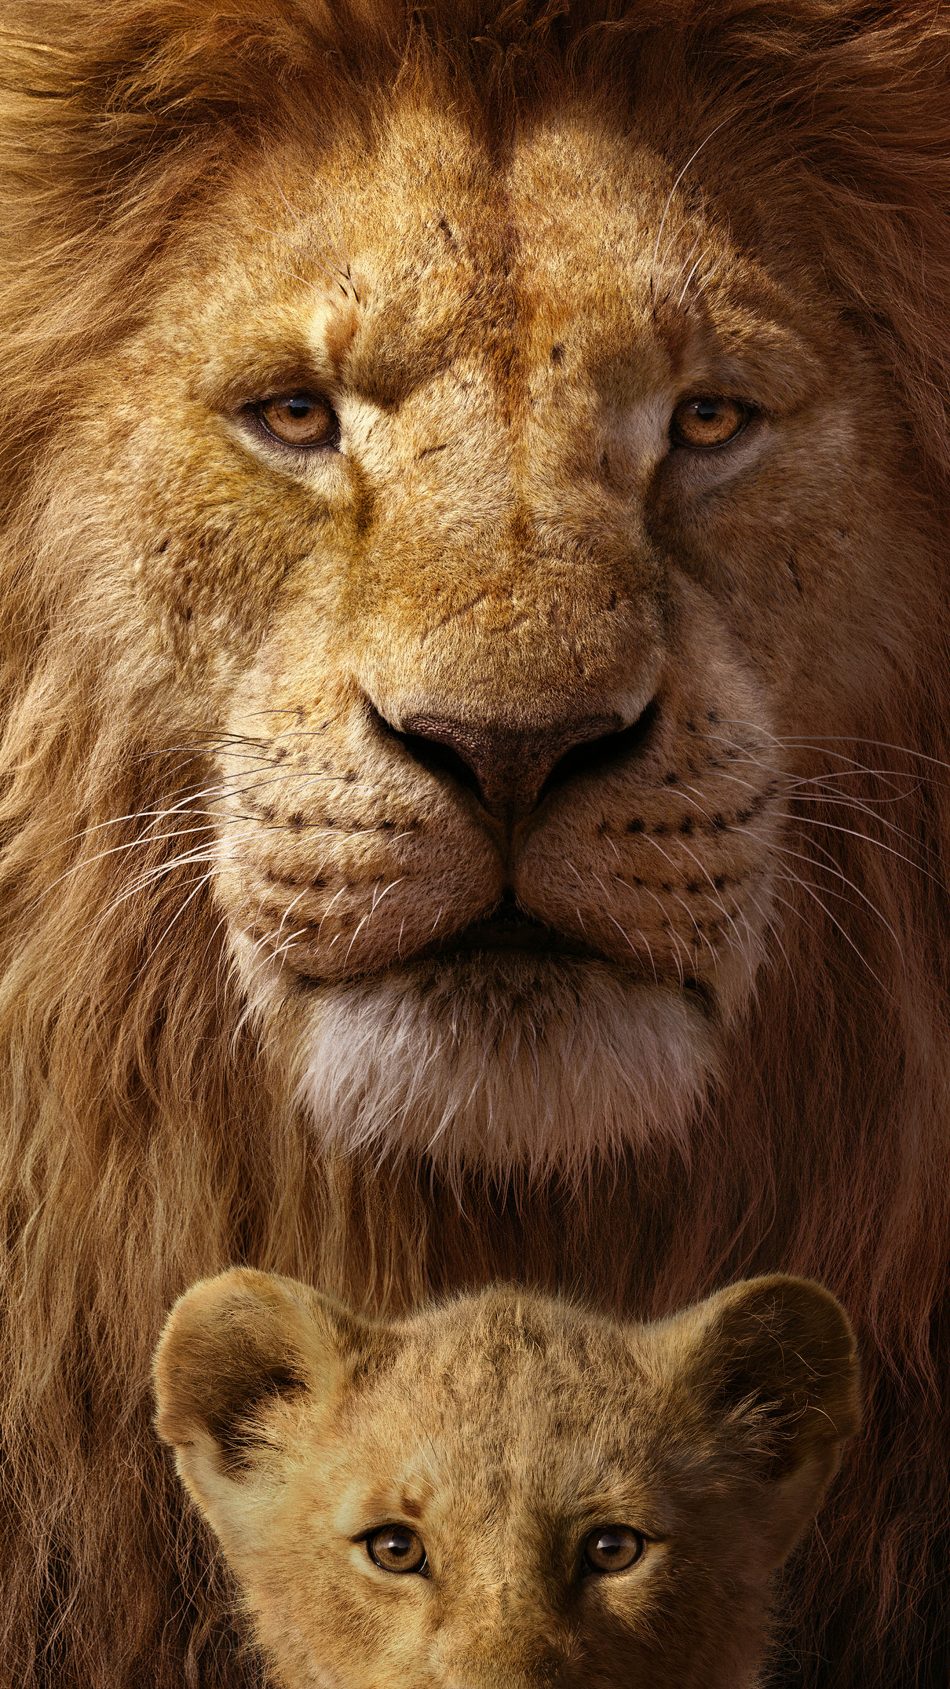 wach lion king free online